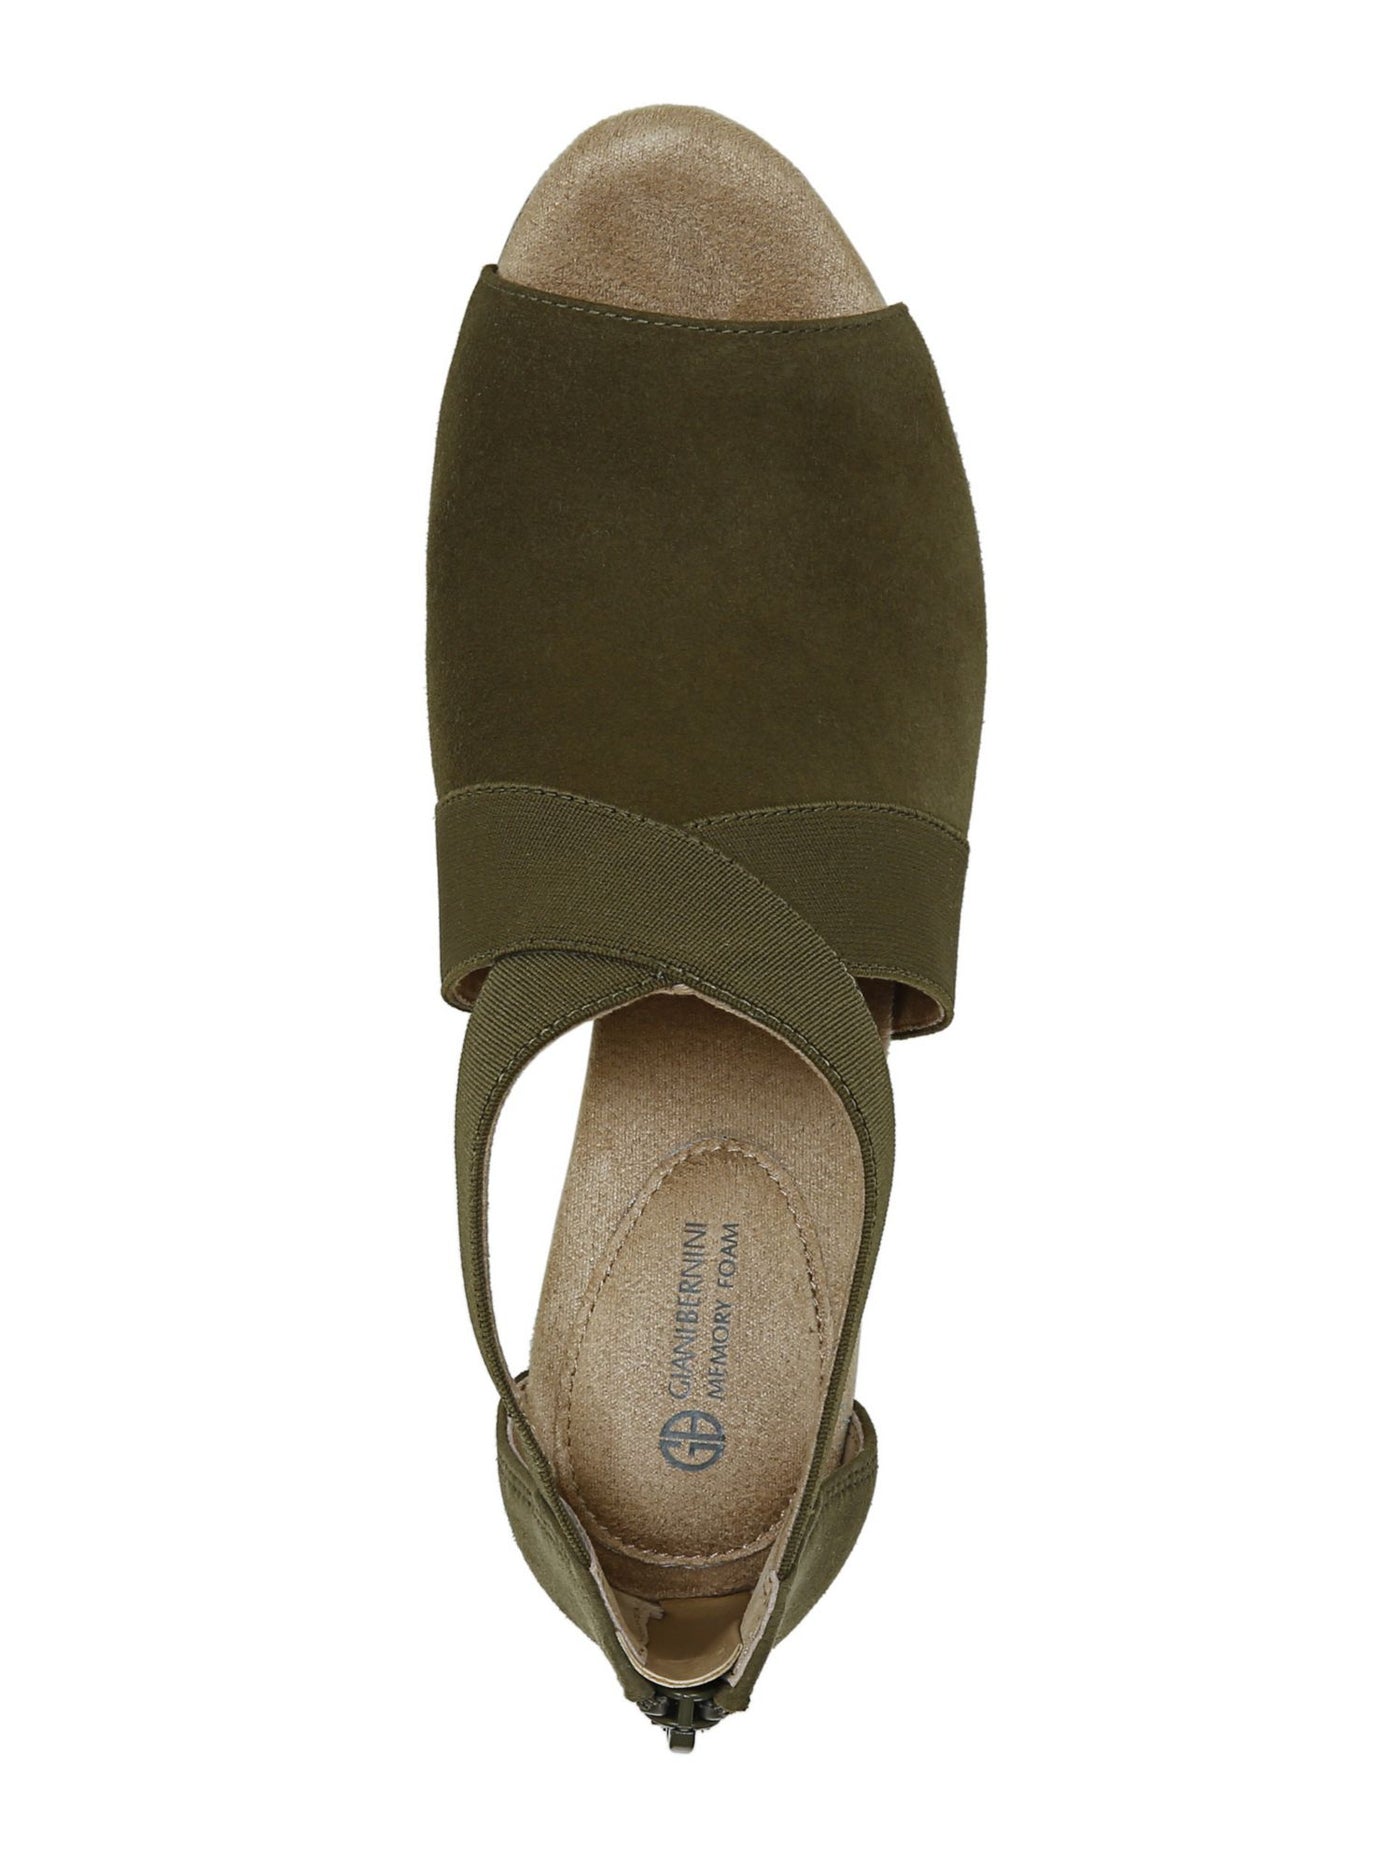 GIANI BERNINI Womens Green Stretch Padded Averie Peep Toe Stacked Heel Zip-Up Heeled Sandal 11 M